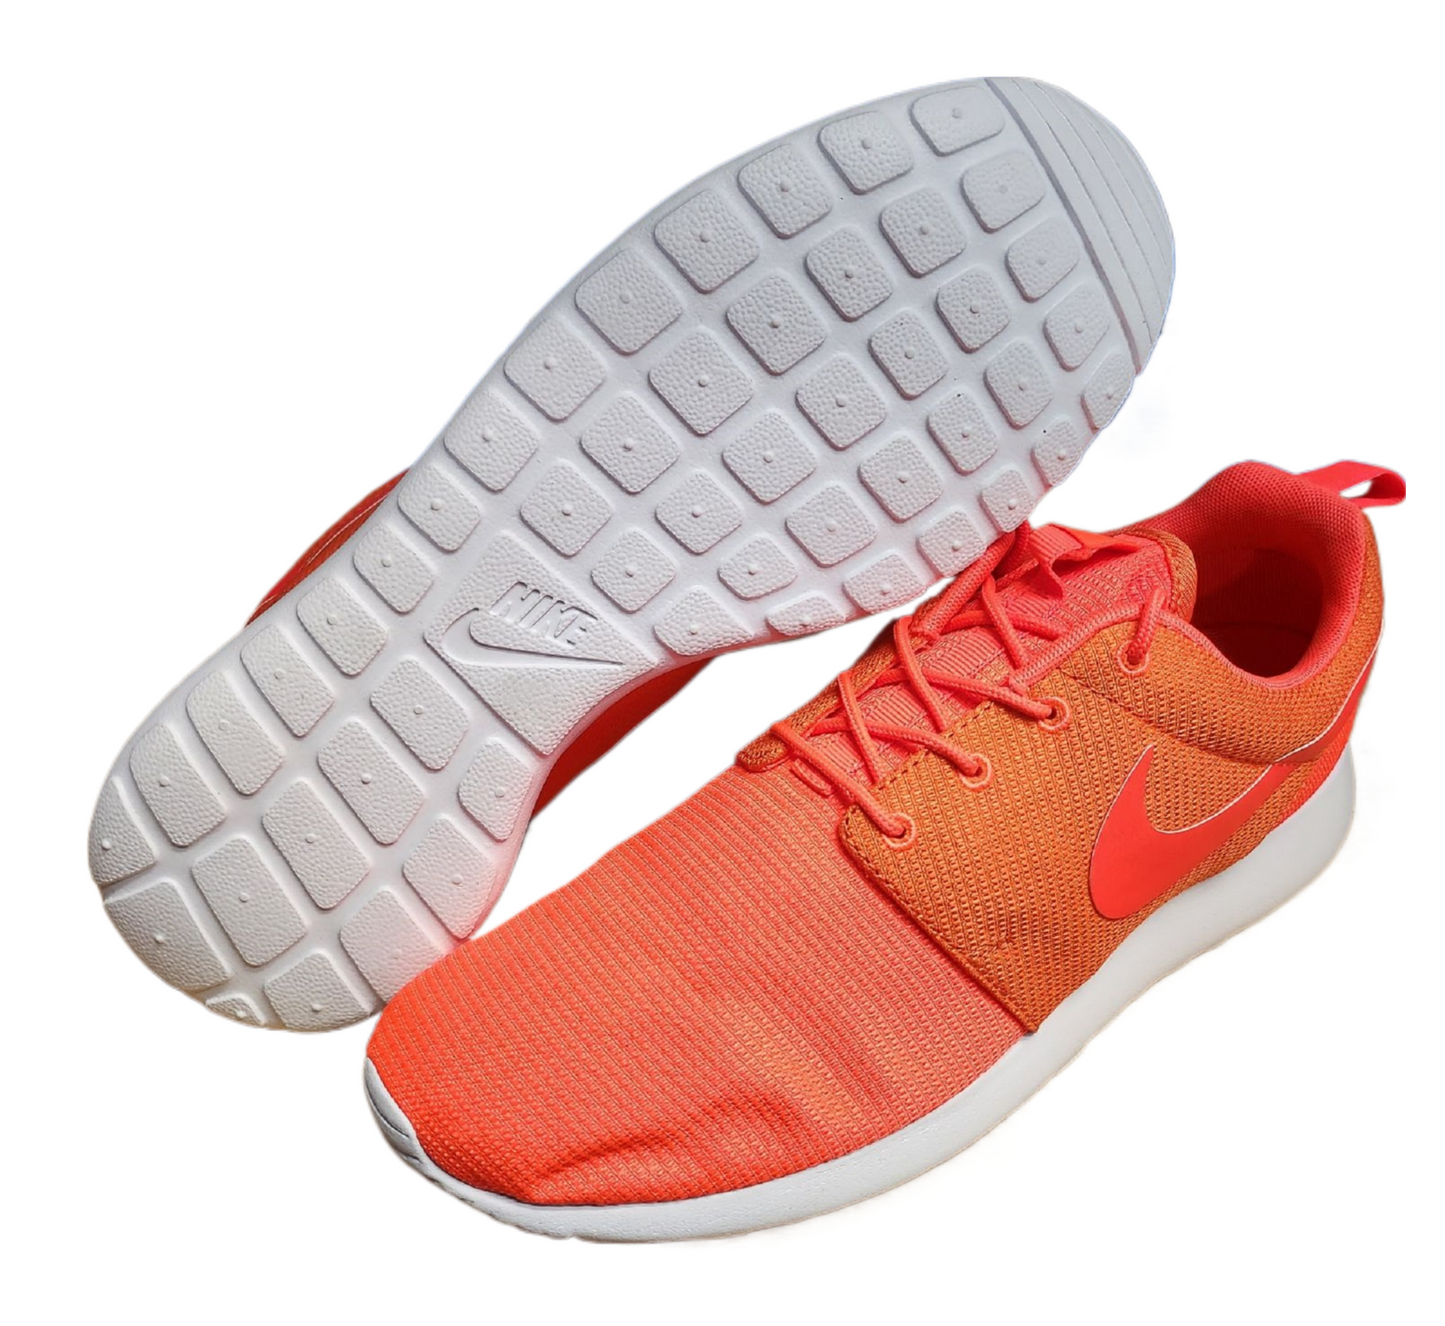 Nike Men Rosherun Sneaker BRGHT CRMSN -TM ORN 511881-663 Deadstock